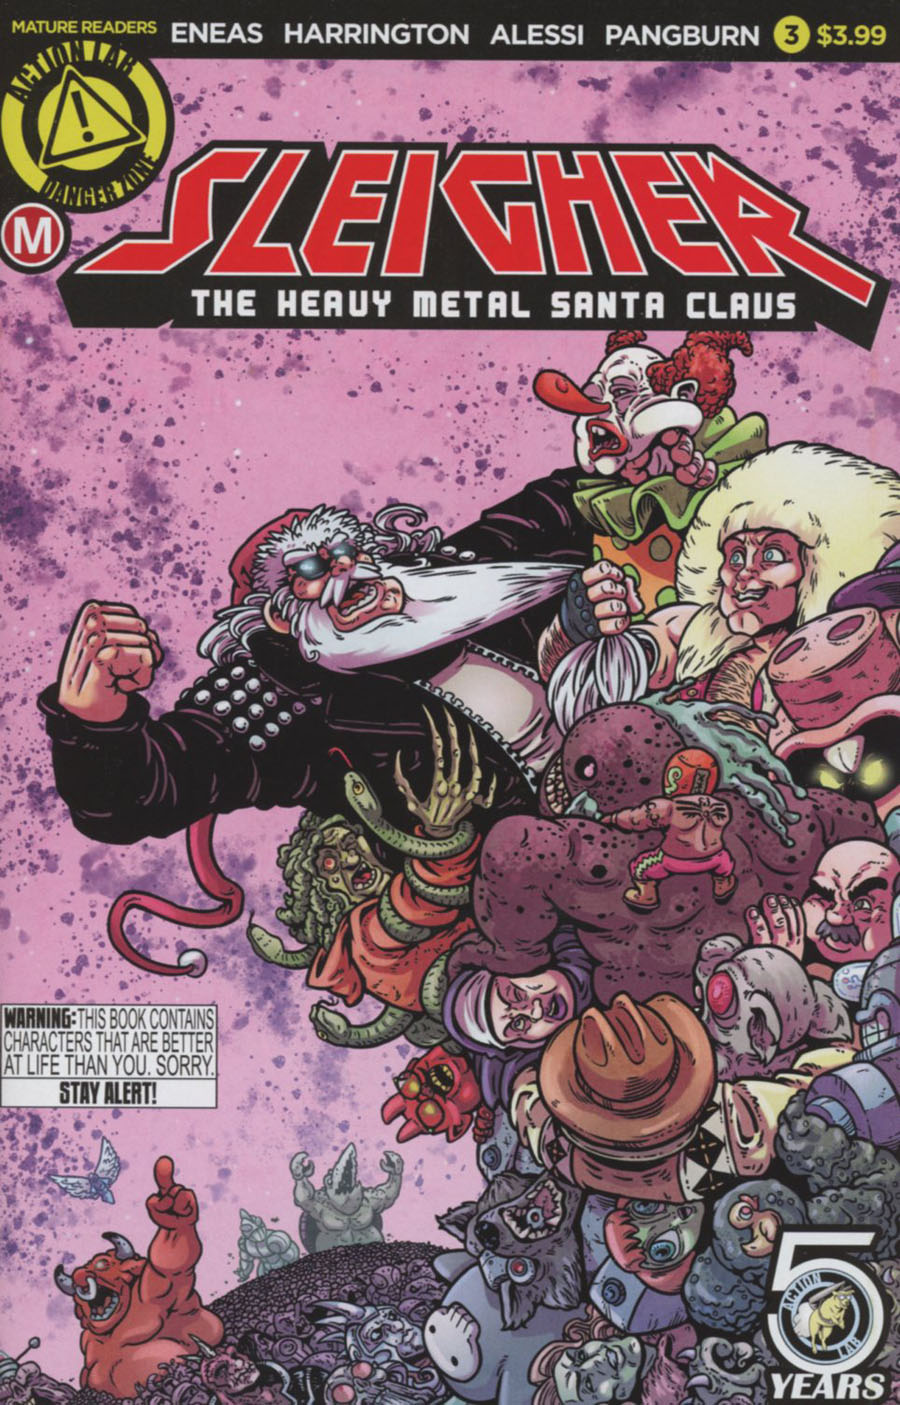 Sleigher Heavy Metal Santa Claus #3